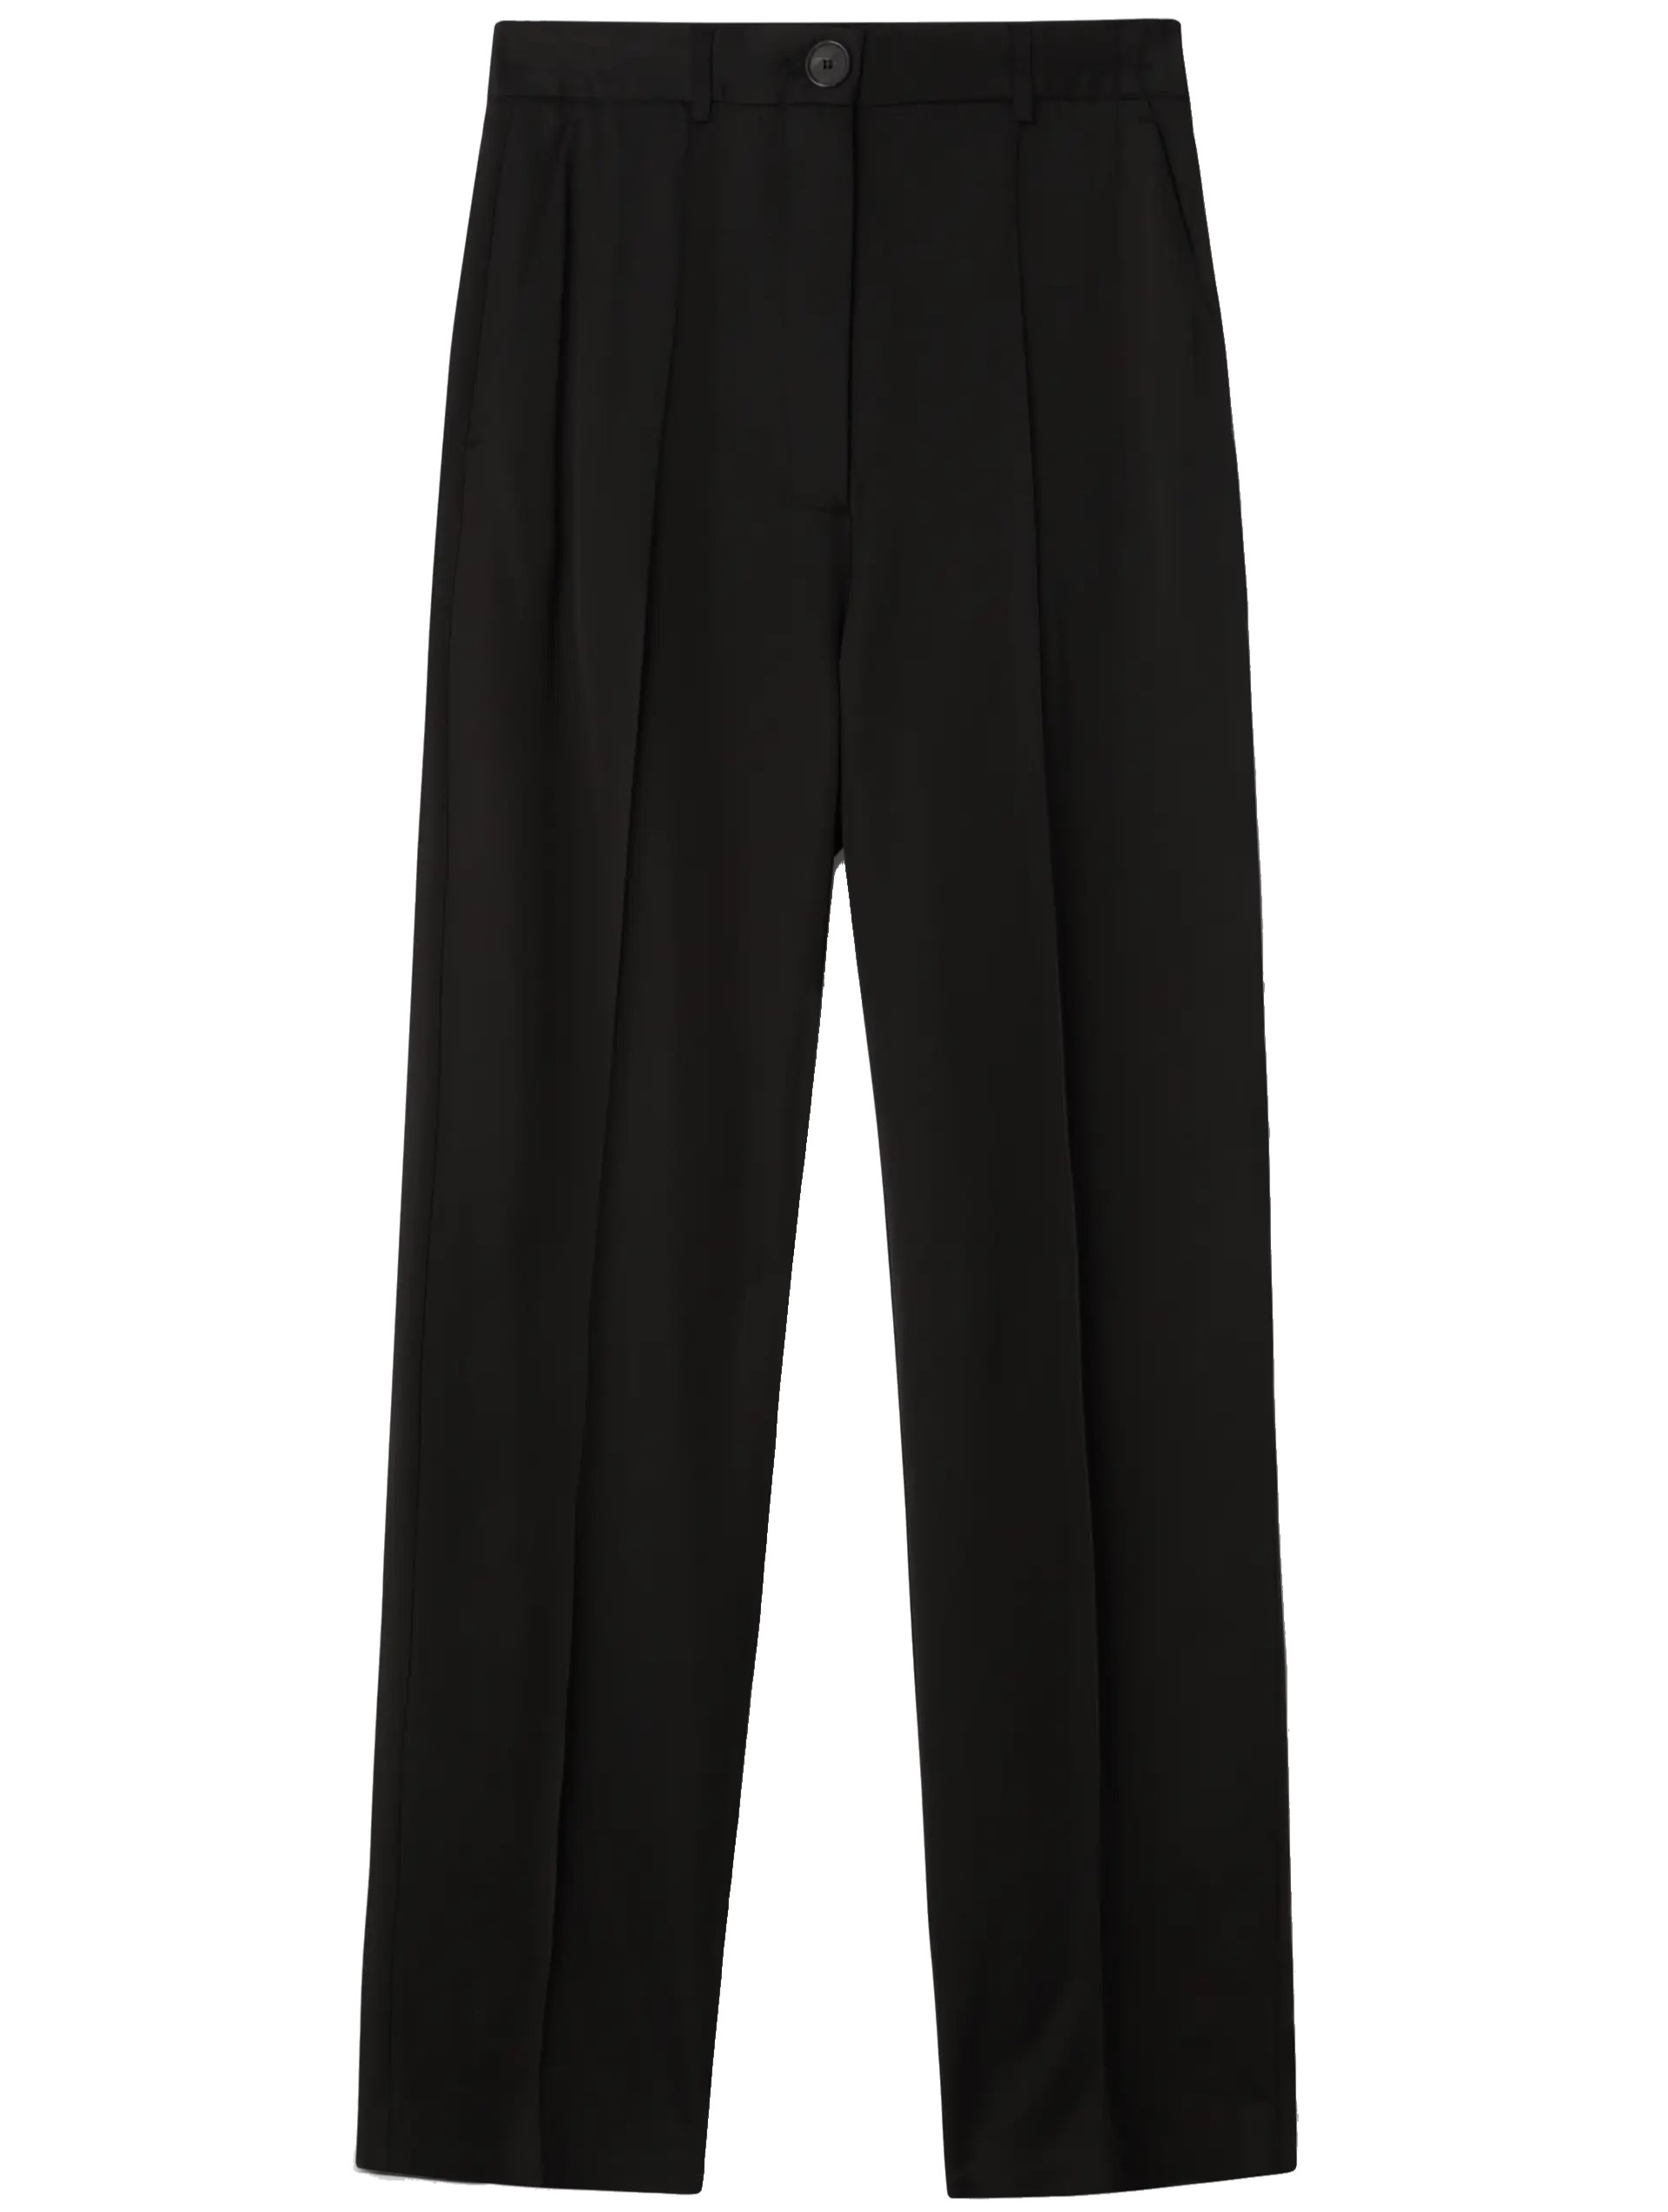 DAGMAR Slim Suit Pant in Shiny Black 36